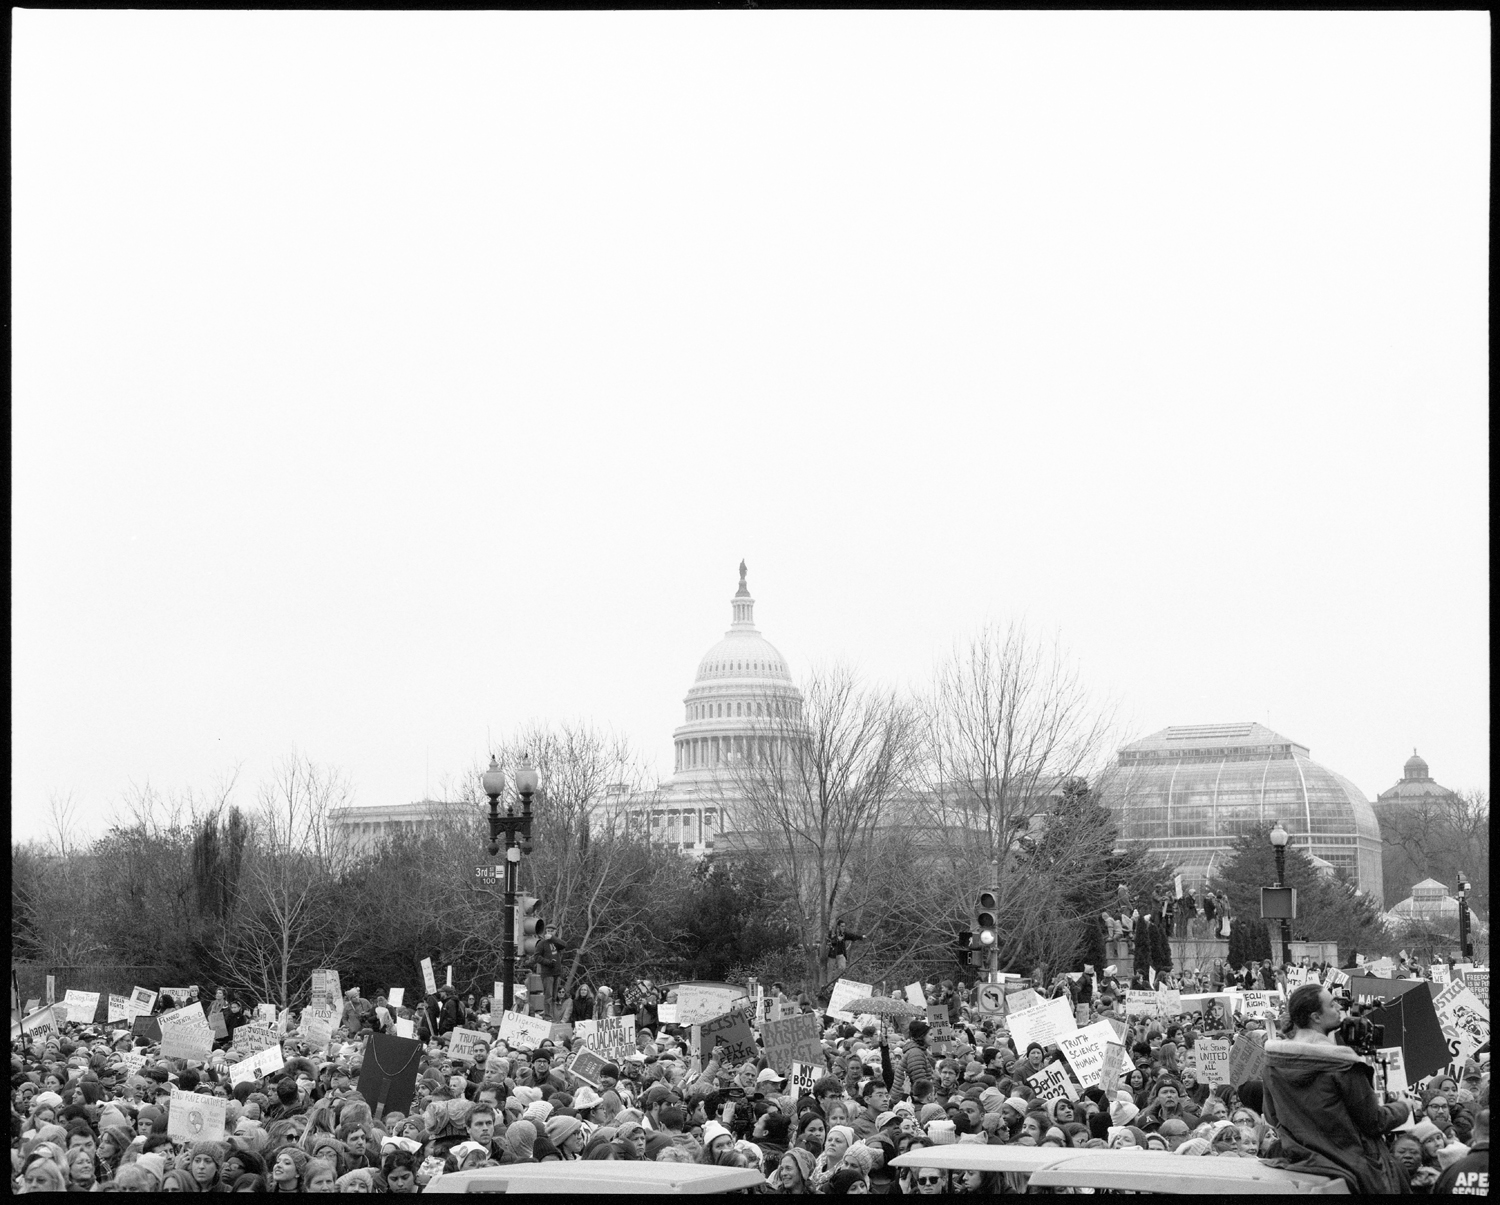   Million Women March ,&nbsp;Washington DC, 01.21.17 